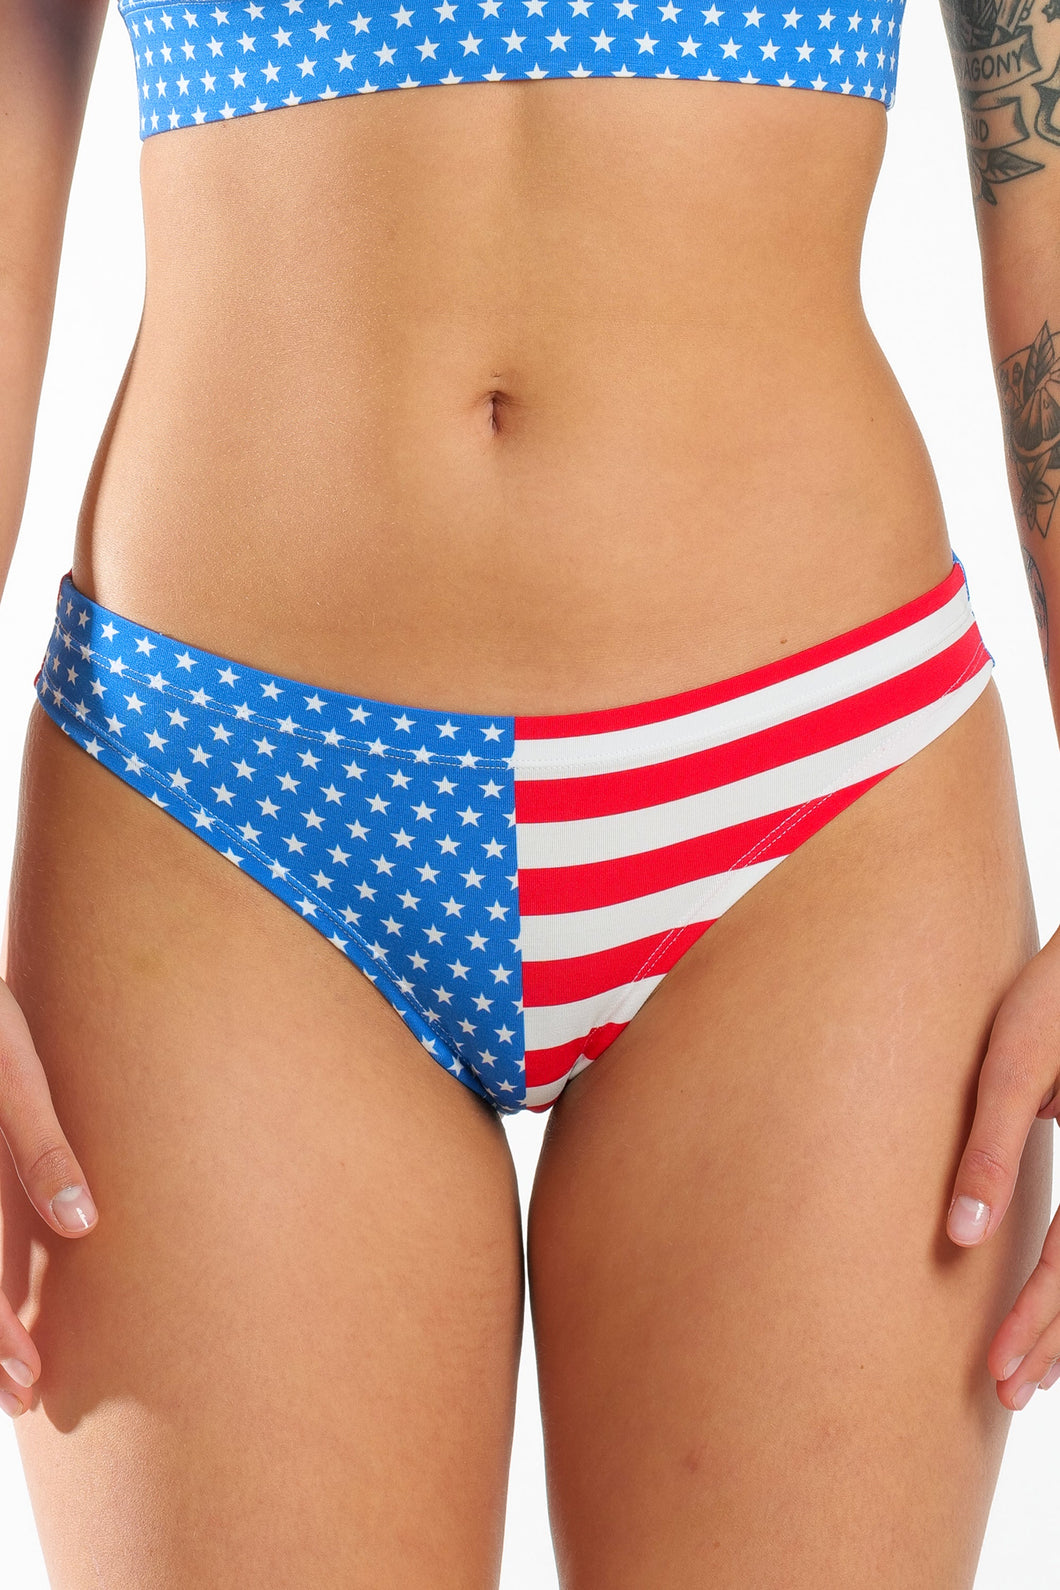 The Ellis Island | USA Flag Modal Bikini Underwear